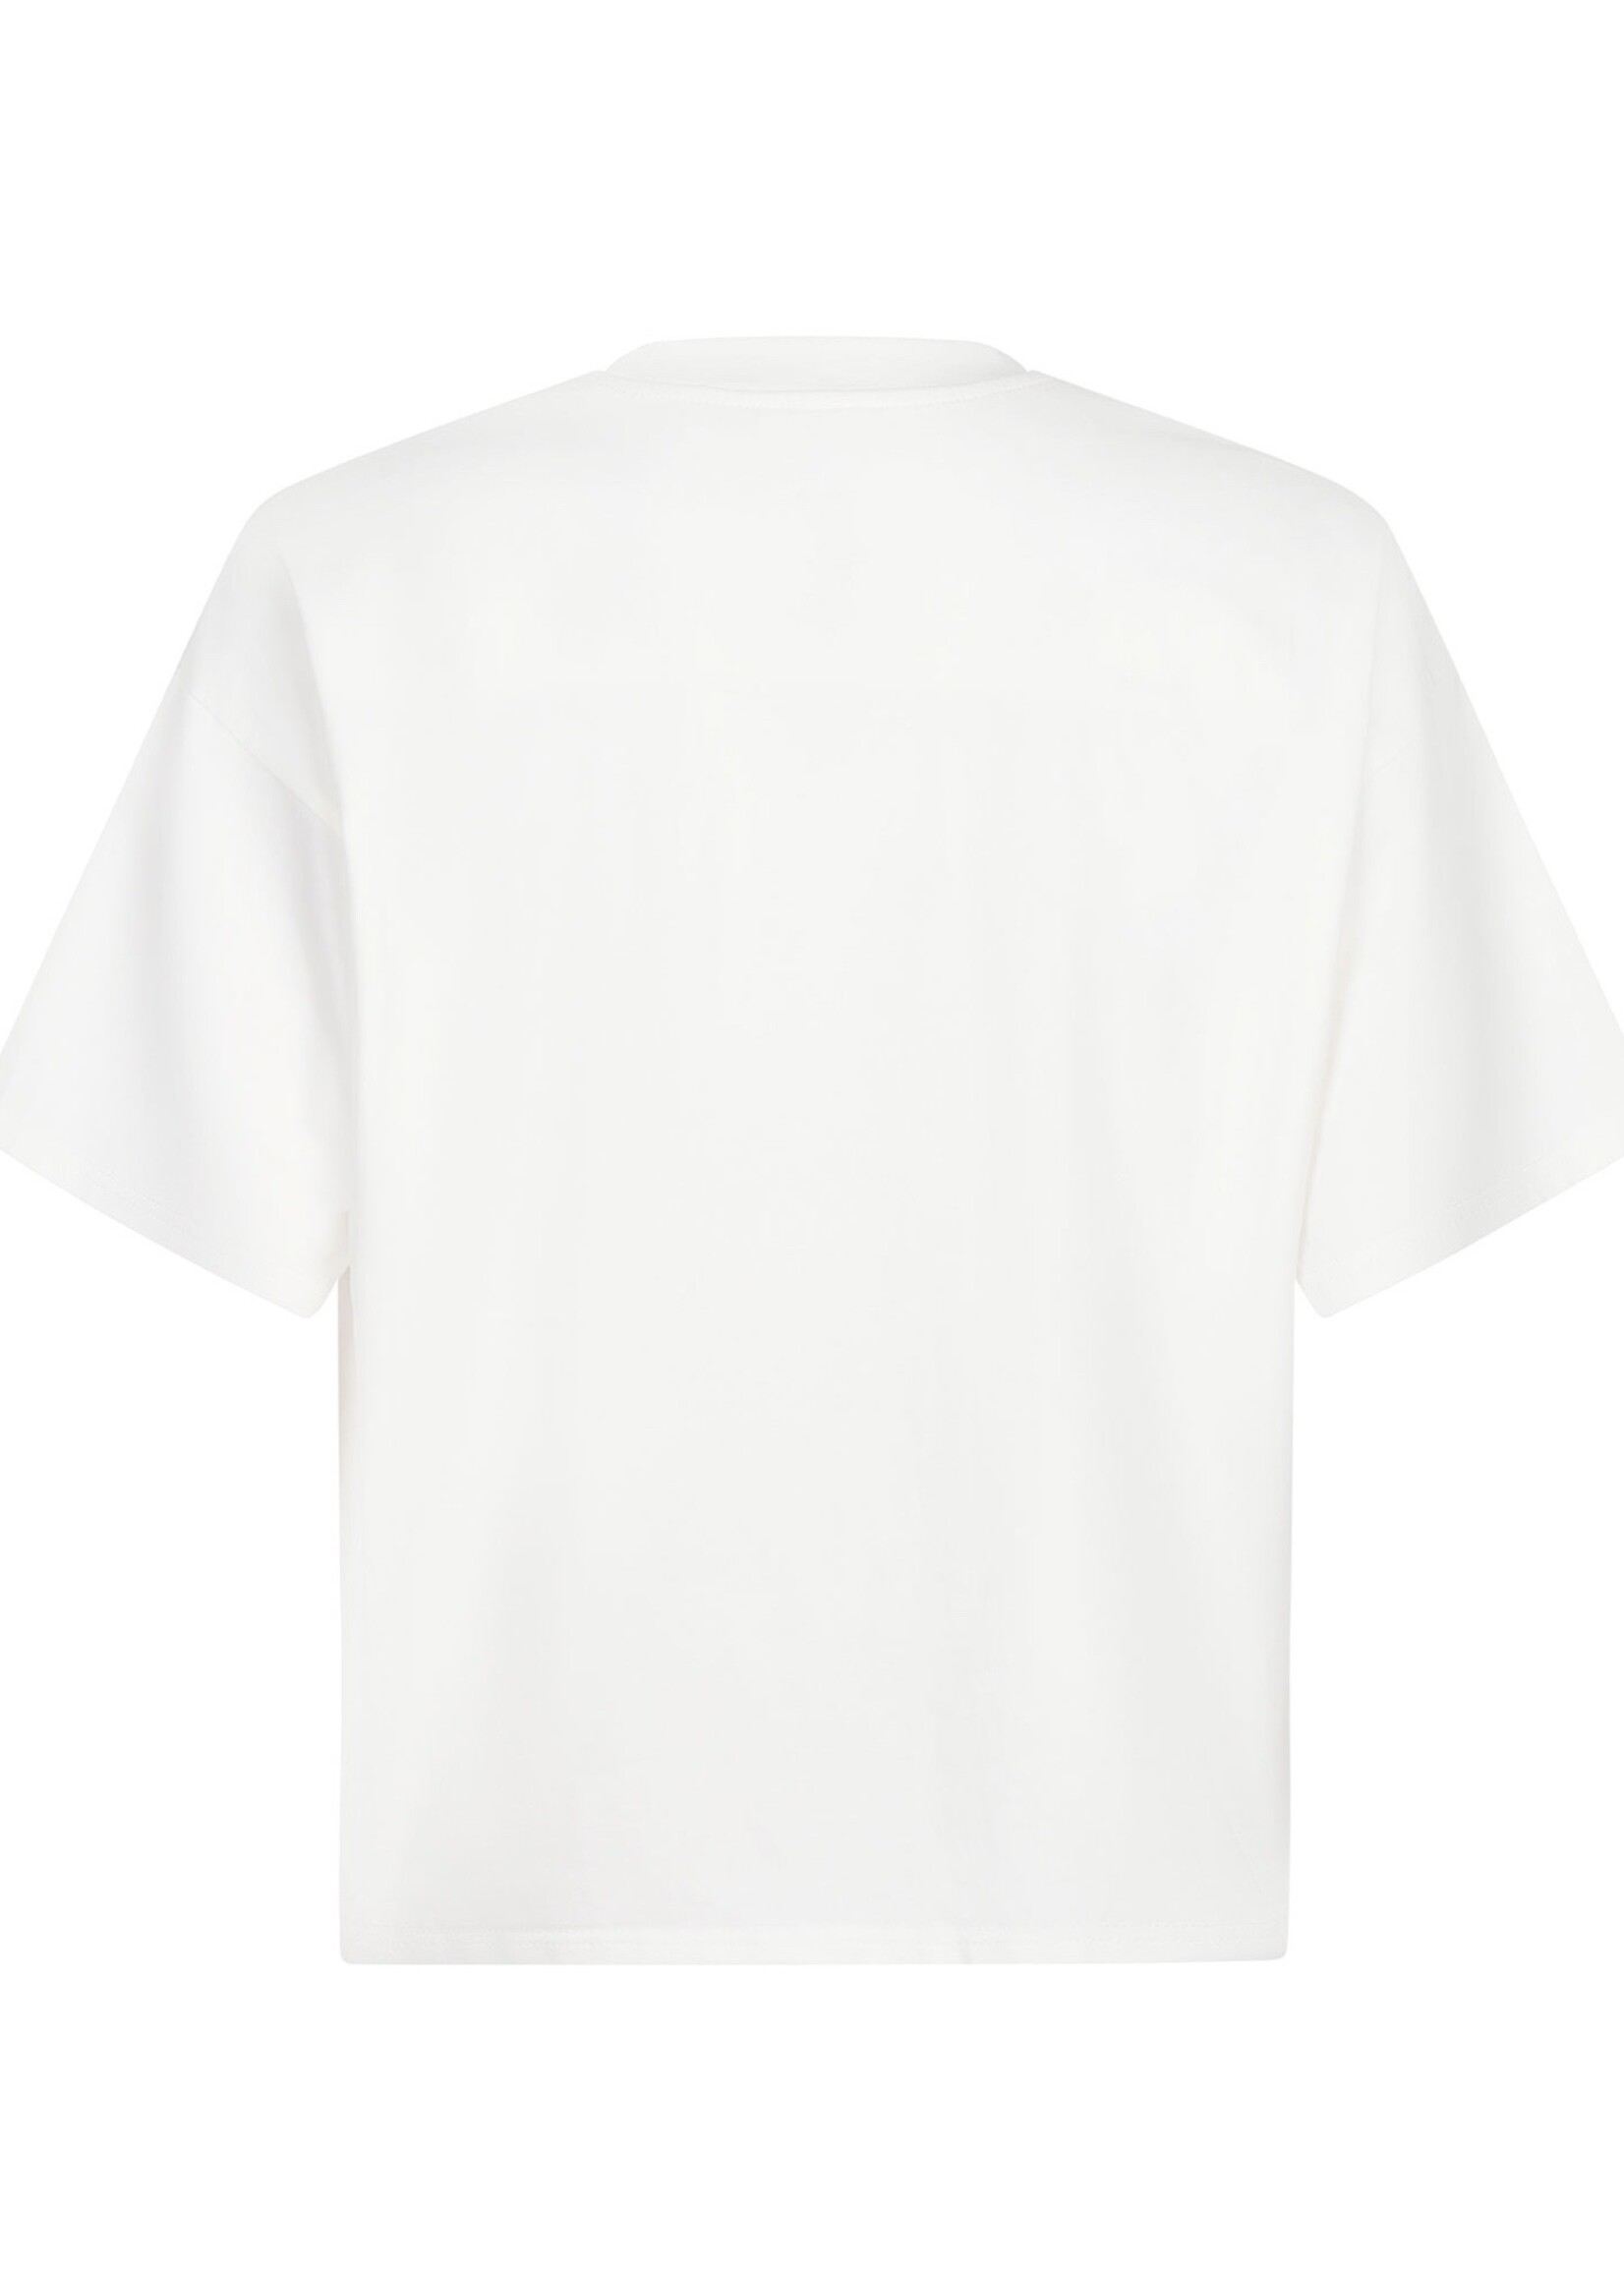 Ydence T-shirt Sunshine navy